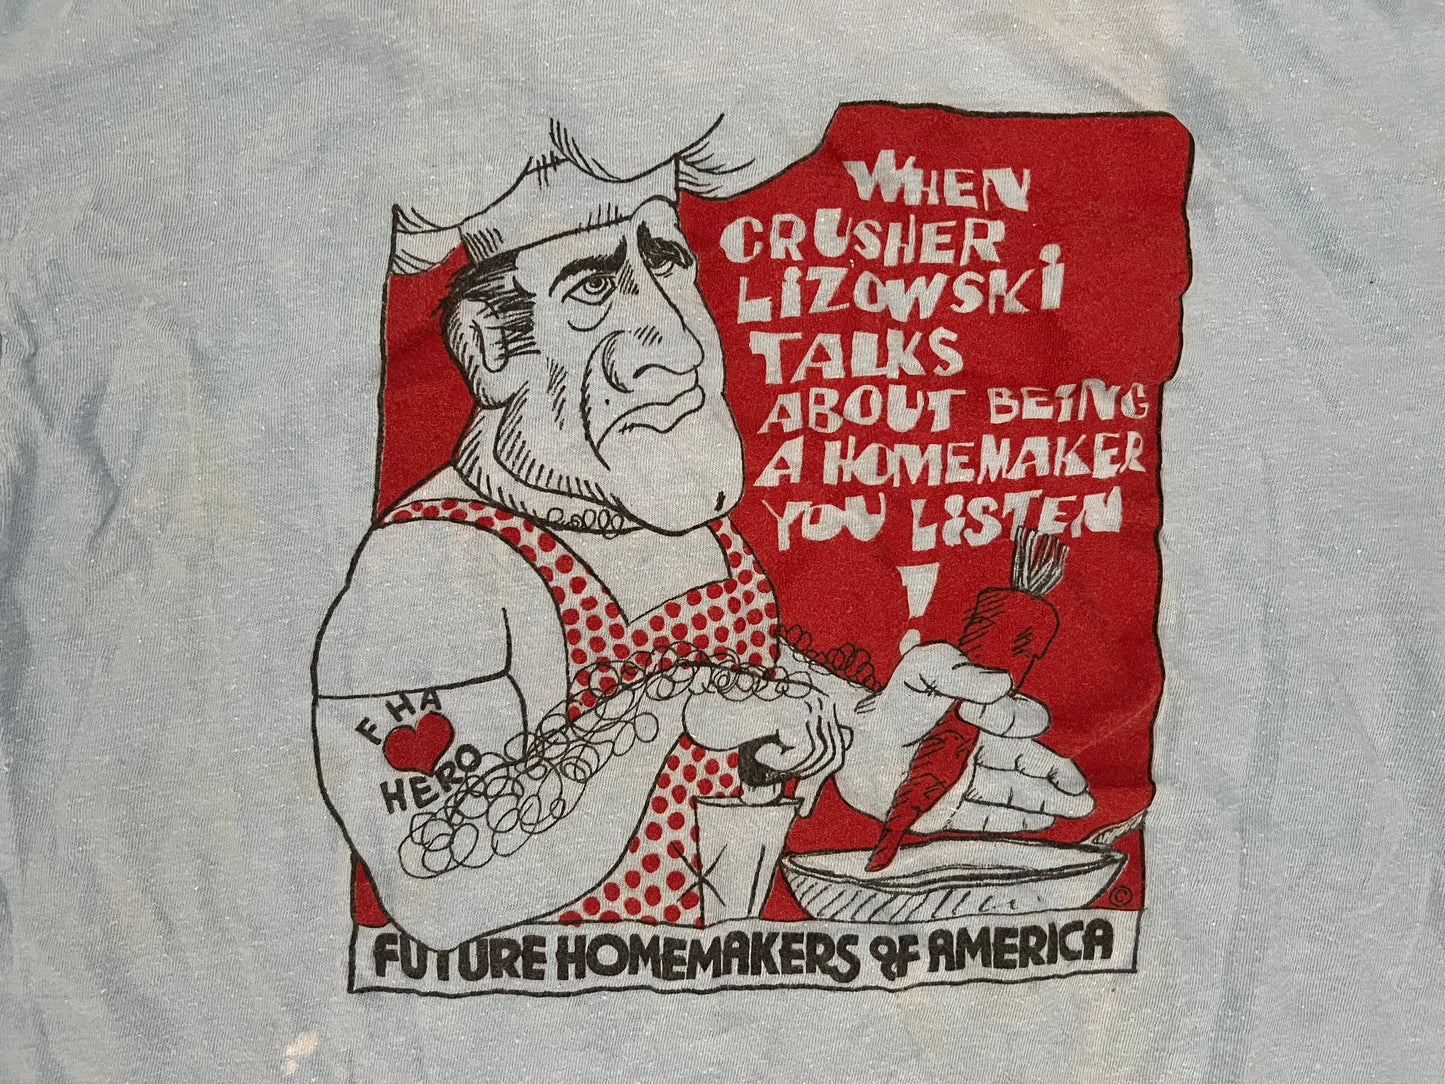 1977 (Approx.) AWA The Crusher “Future Homemakers of America” shirt